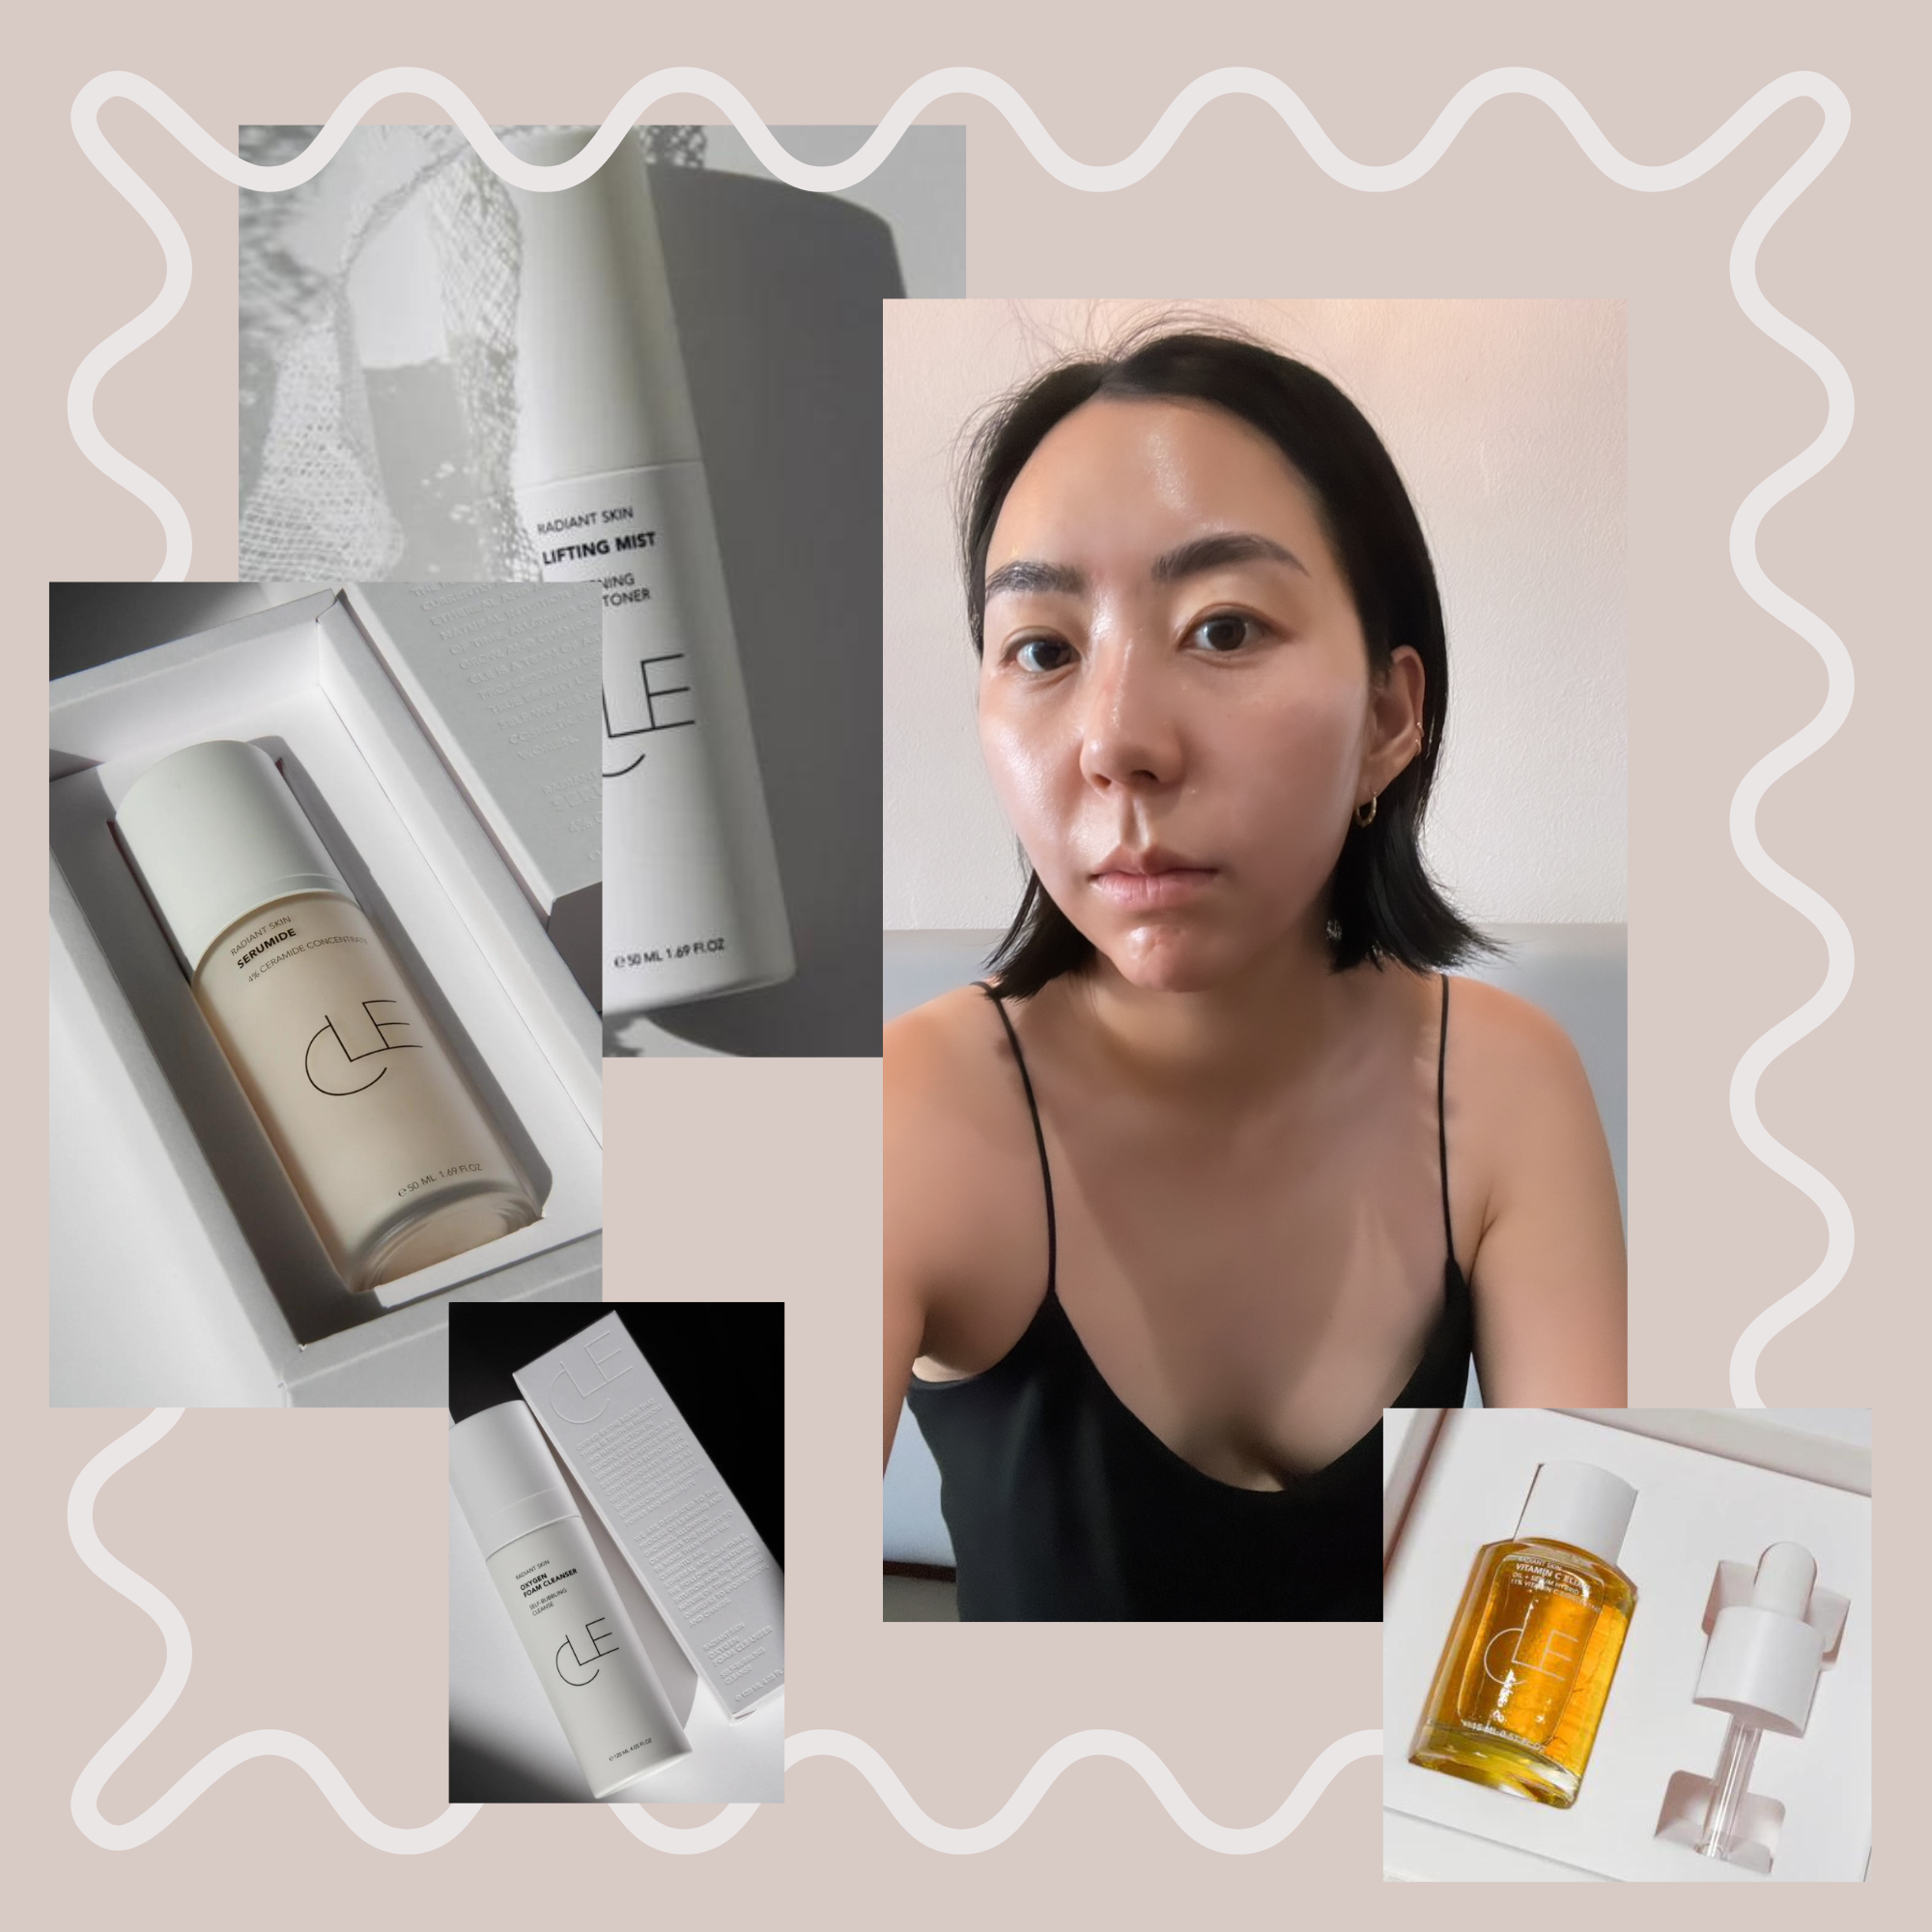 CLE Cosmetics founder Lauren Jin isn't setting an alarm tonight